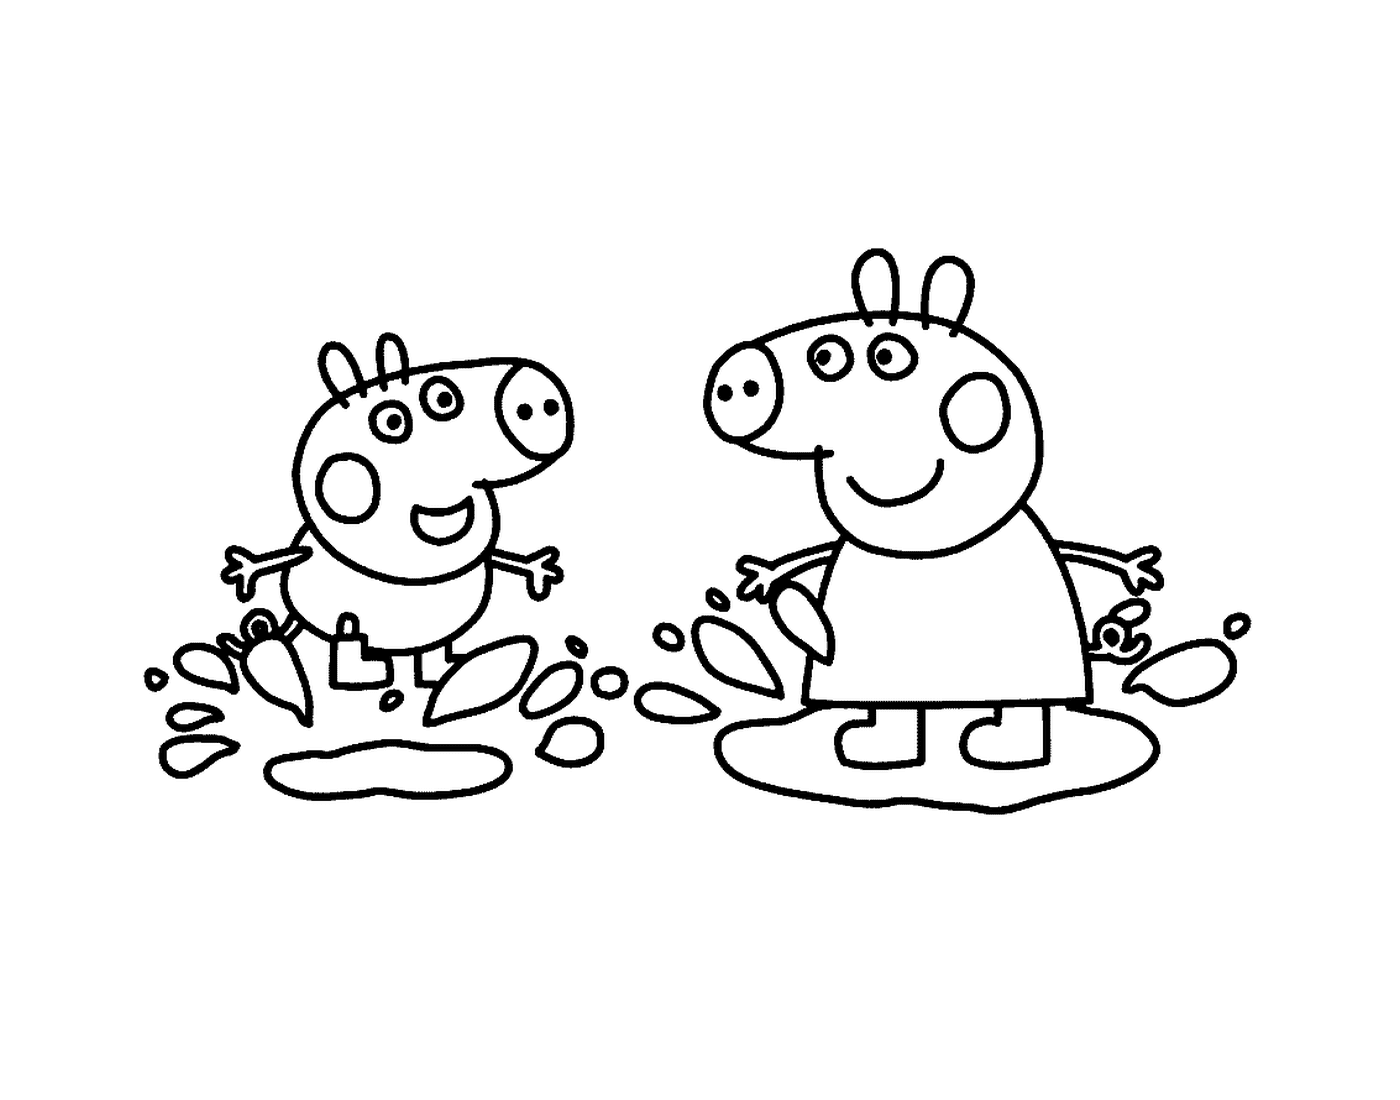  Un par de personajes de Peppa Pig lado a lado 